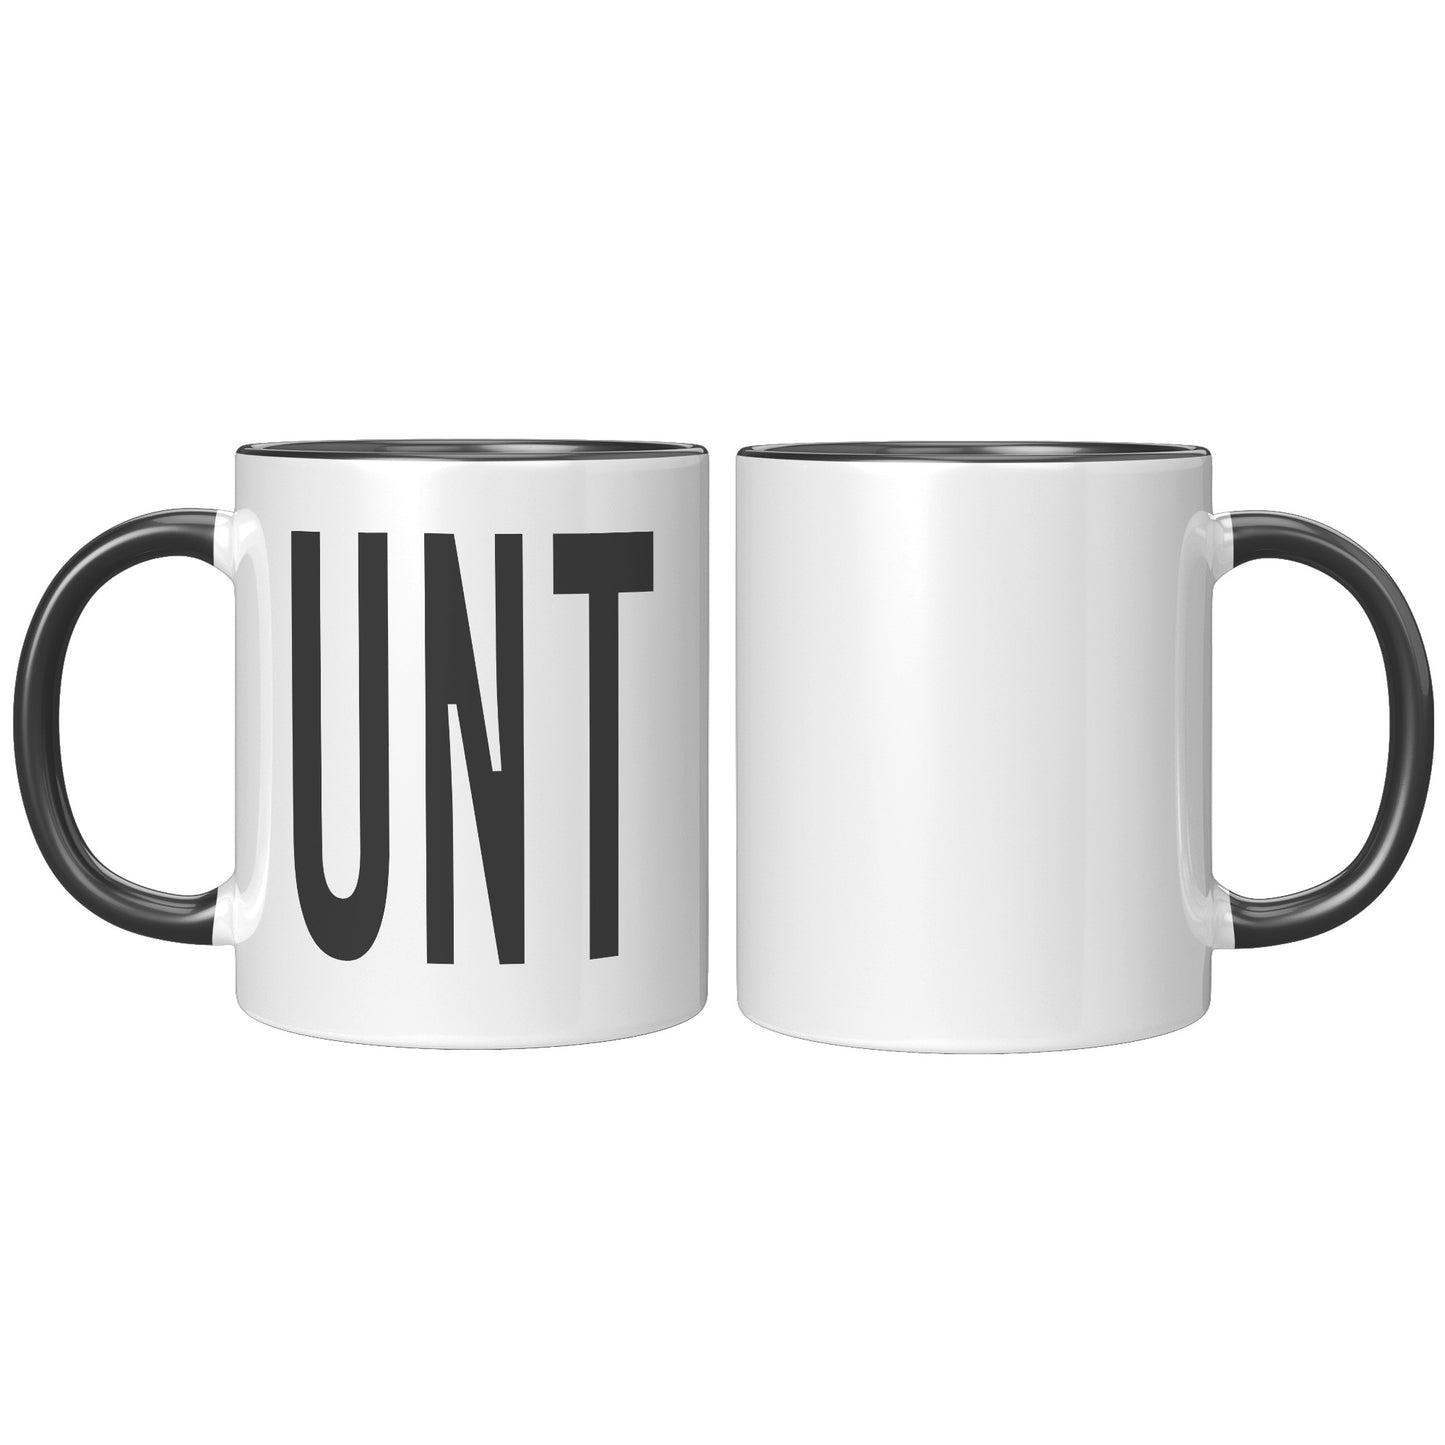 Unt Mug With C Handle [Cunt]